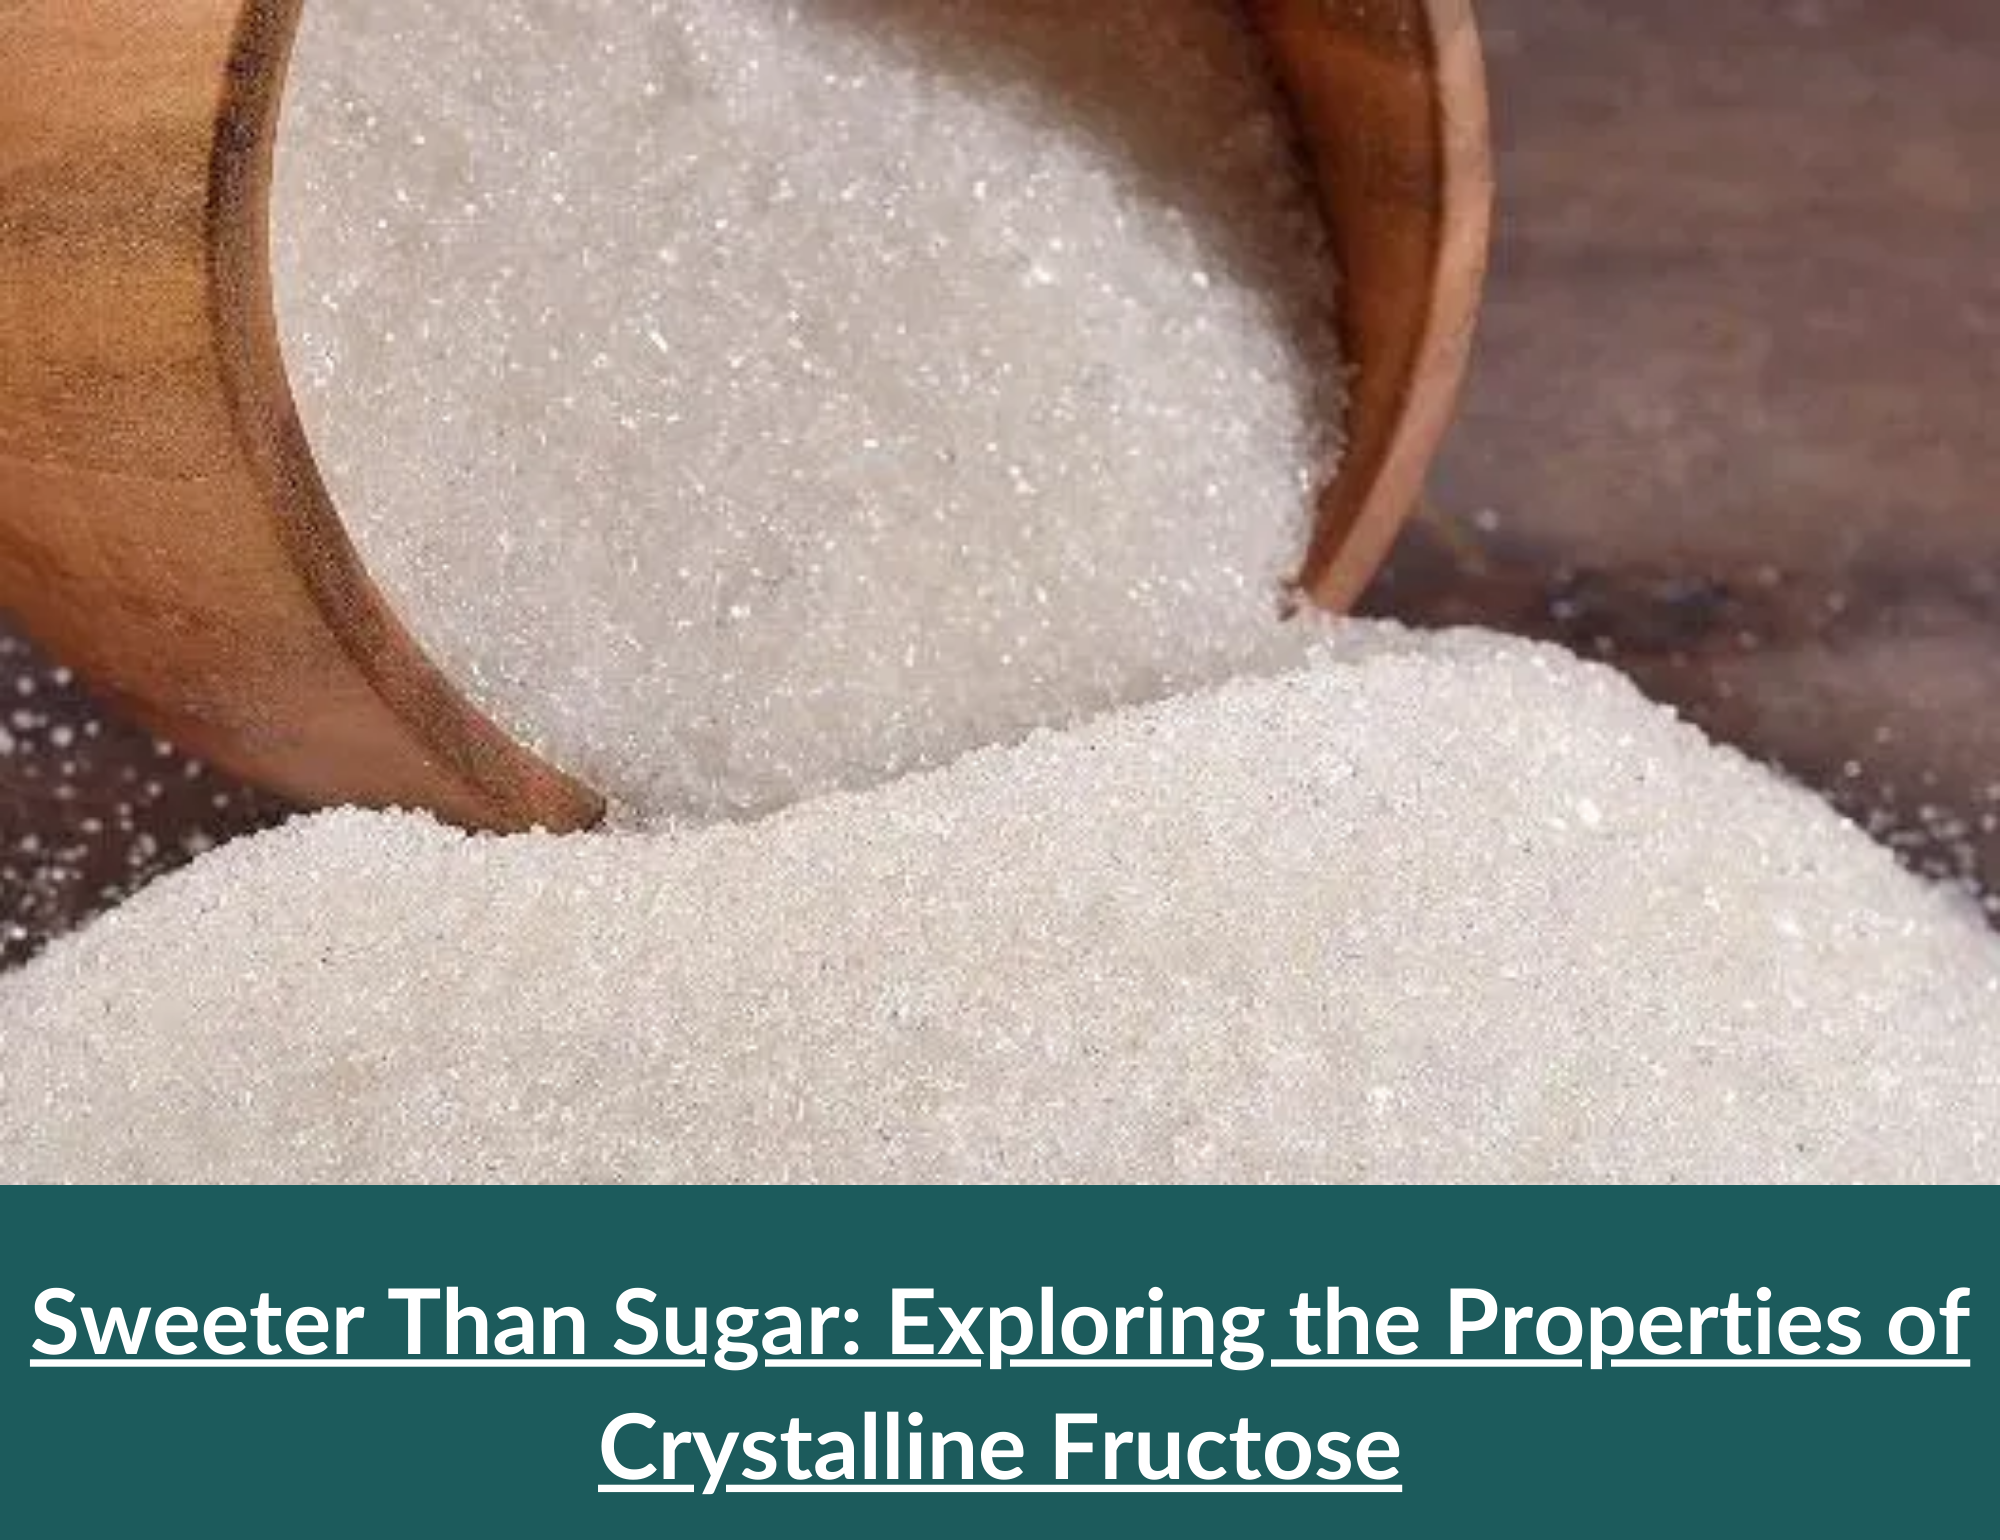 Properties of Crystalline Fructose